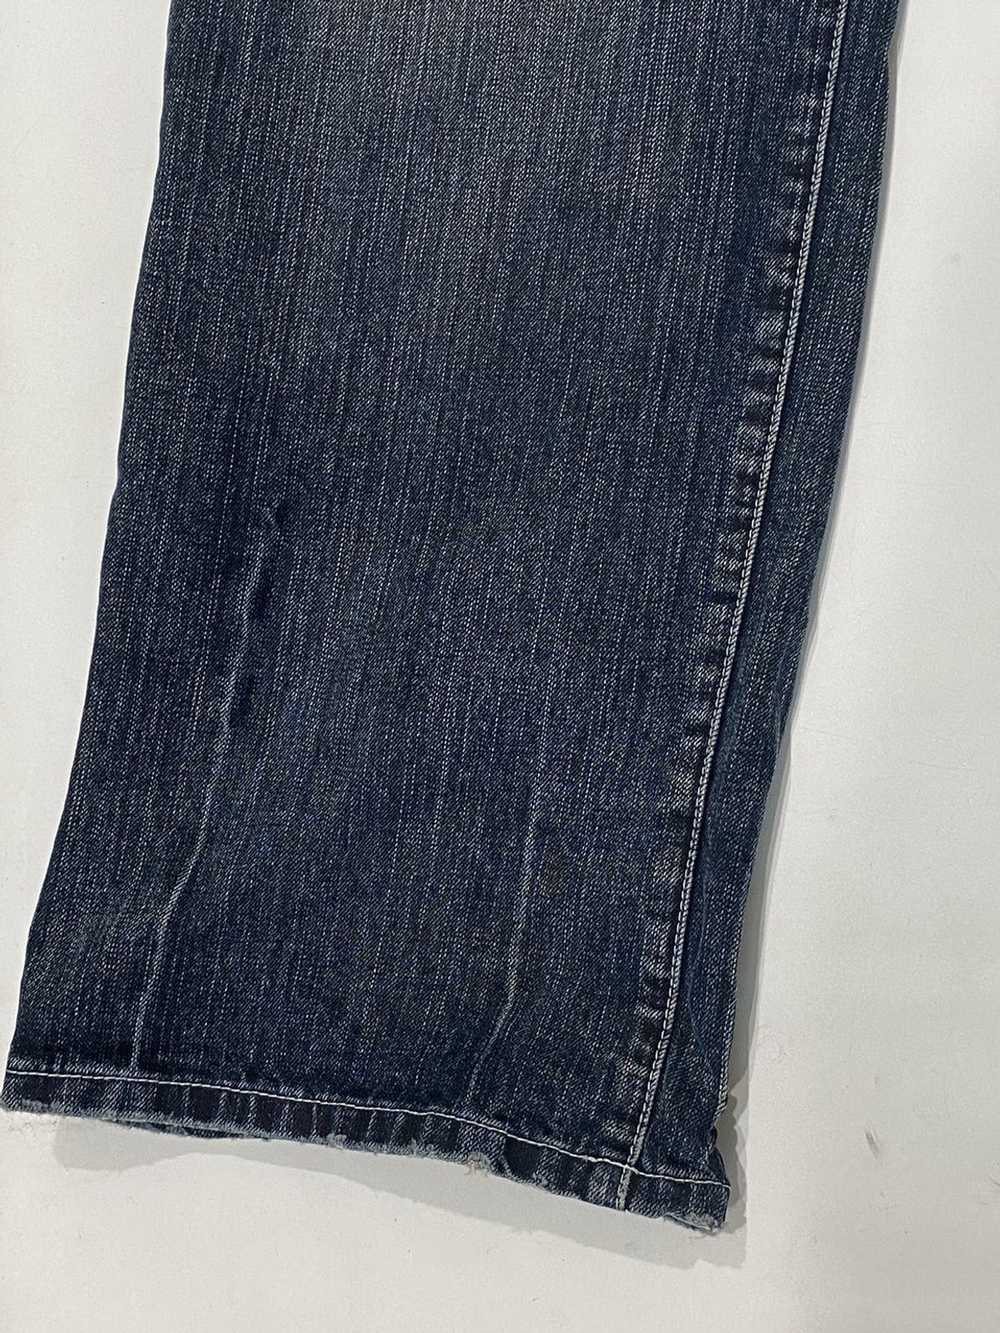 Akademiks Akademiks Men's Jeans Size 40 - image 2